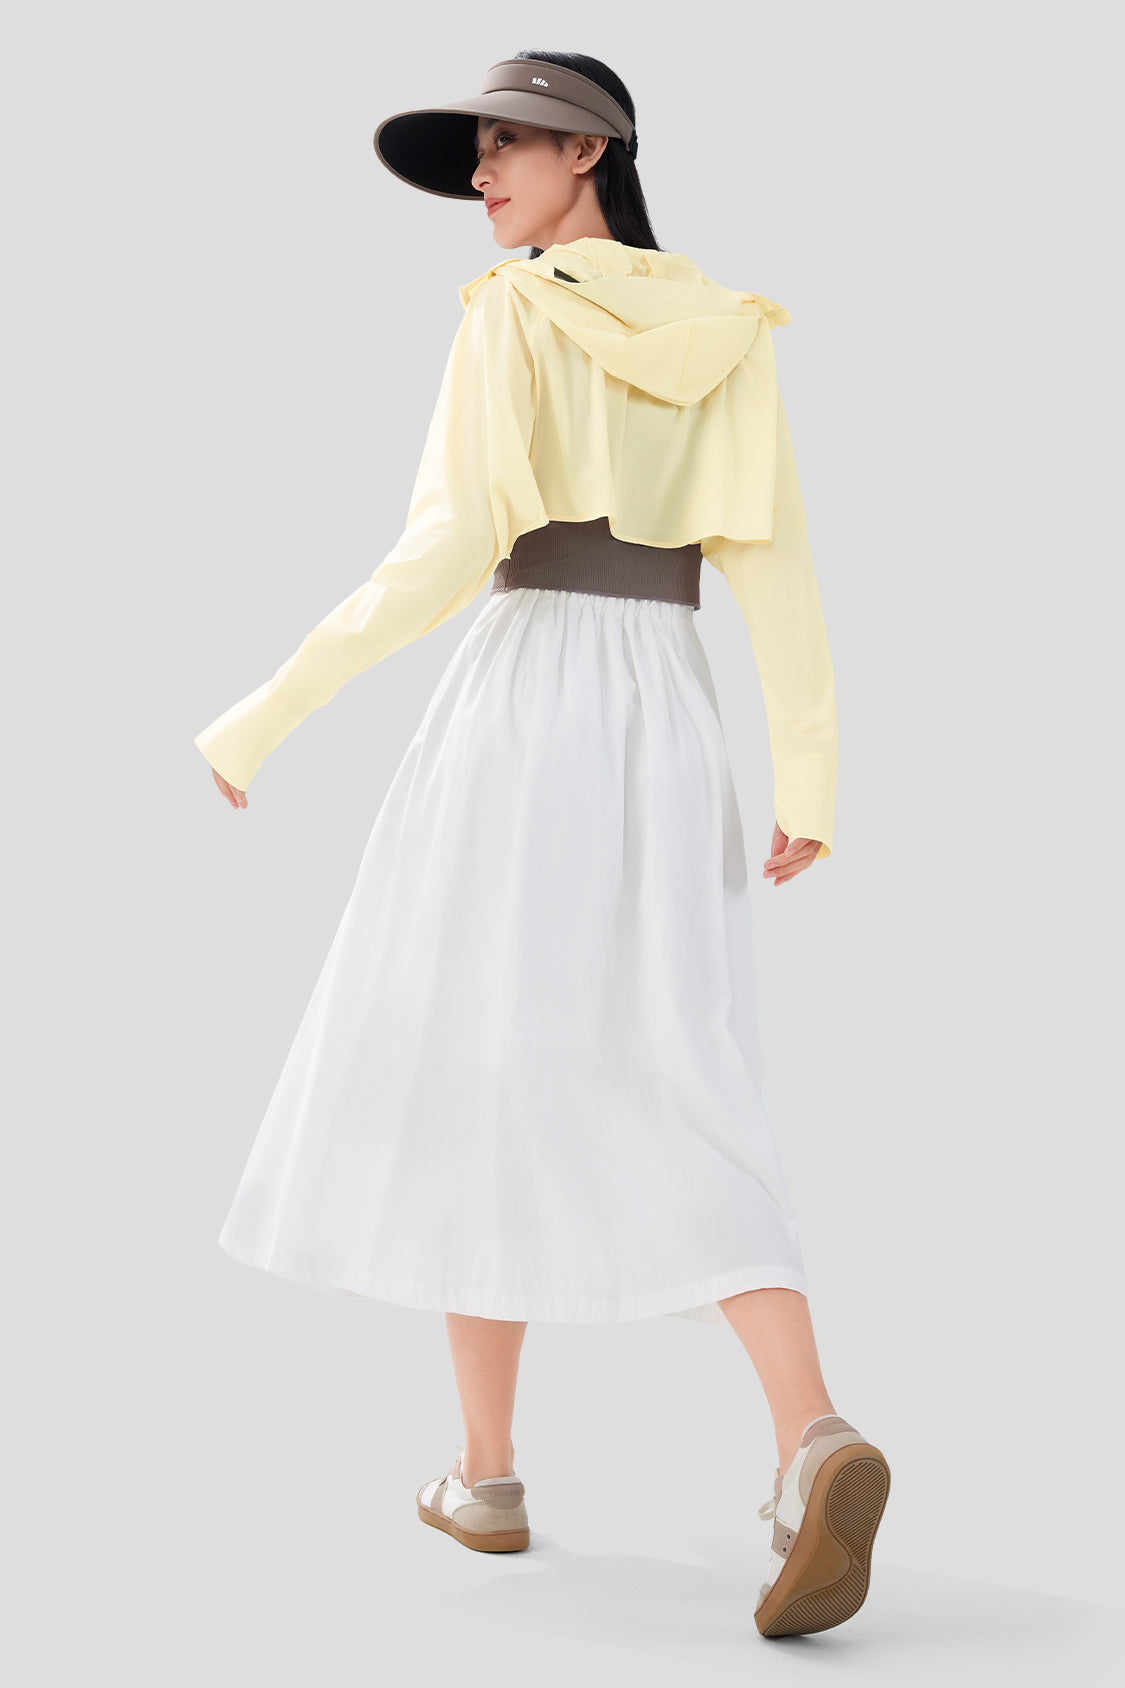 beneunder women's sun wear upf50+ #color_cream yellow